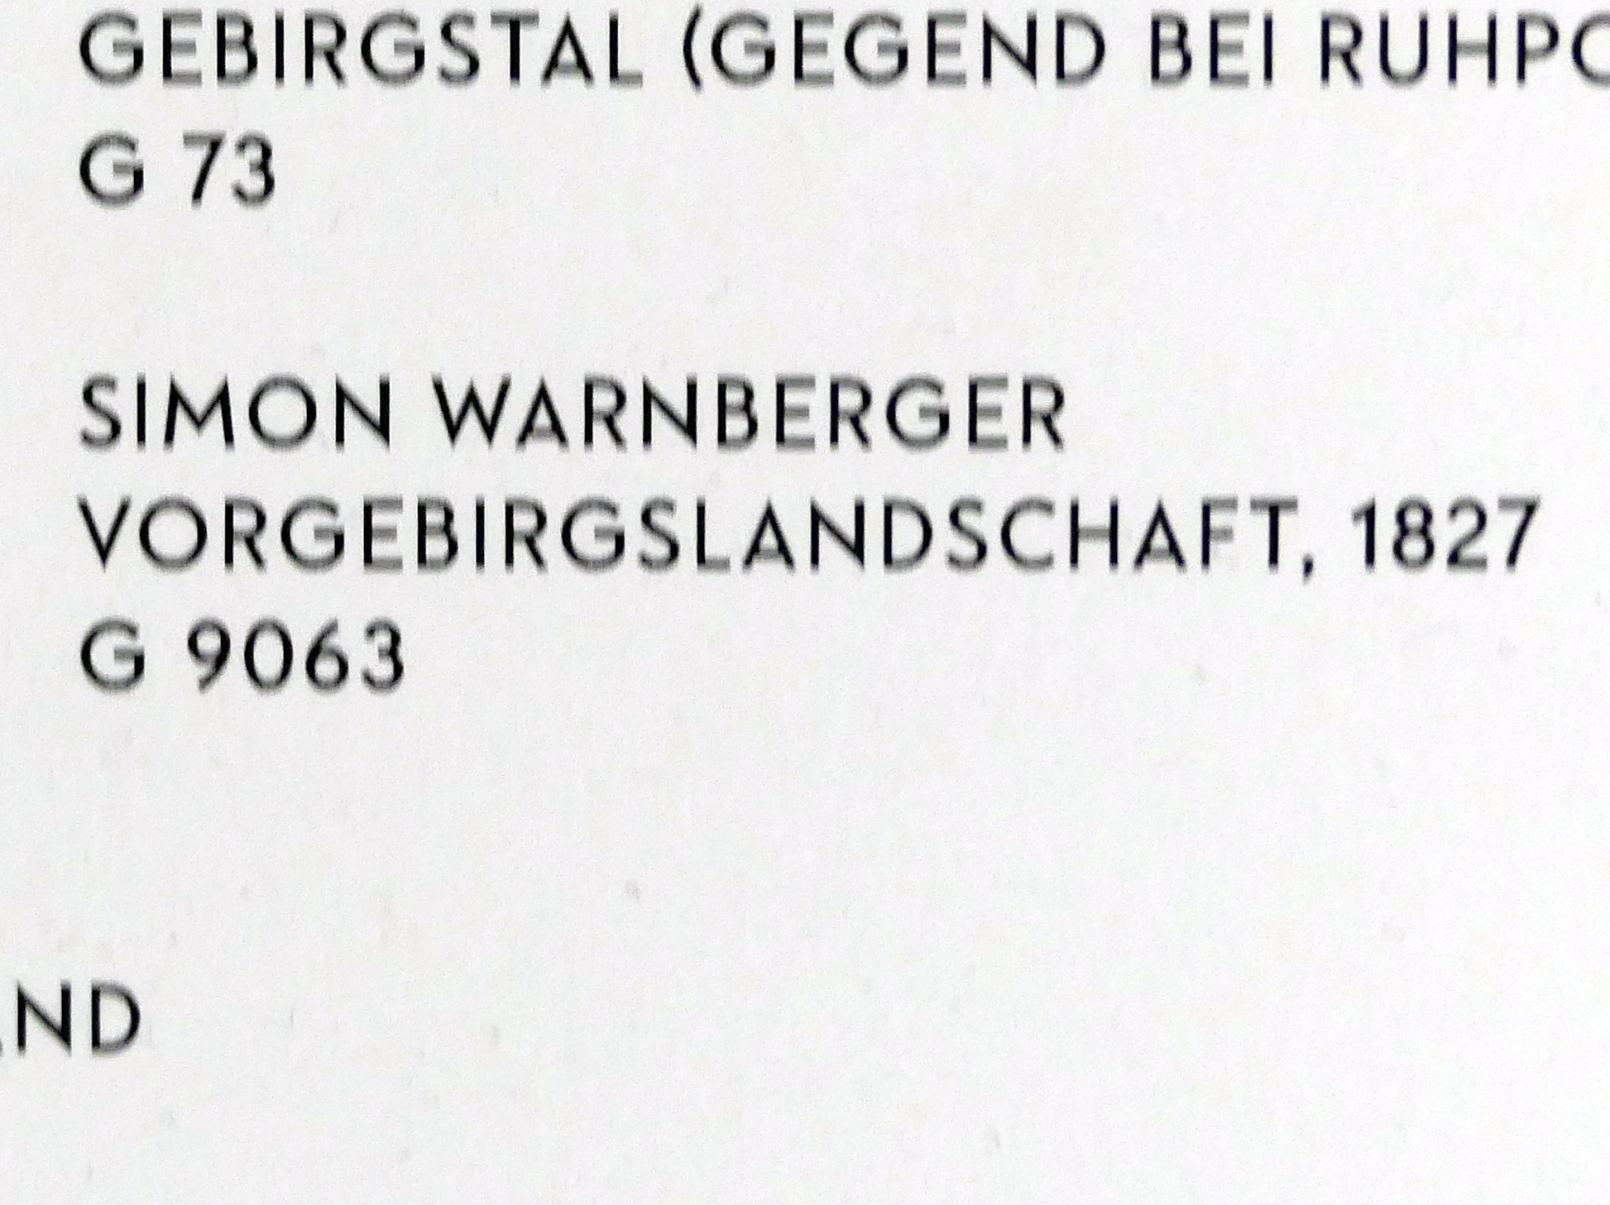 Simon Warnberger (1827), Vorgebirgslandschaft, München, Lenbachhaus, Saal 21, 1827, Bild 2/2